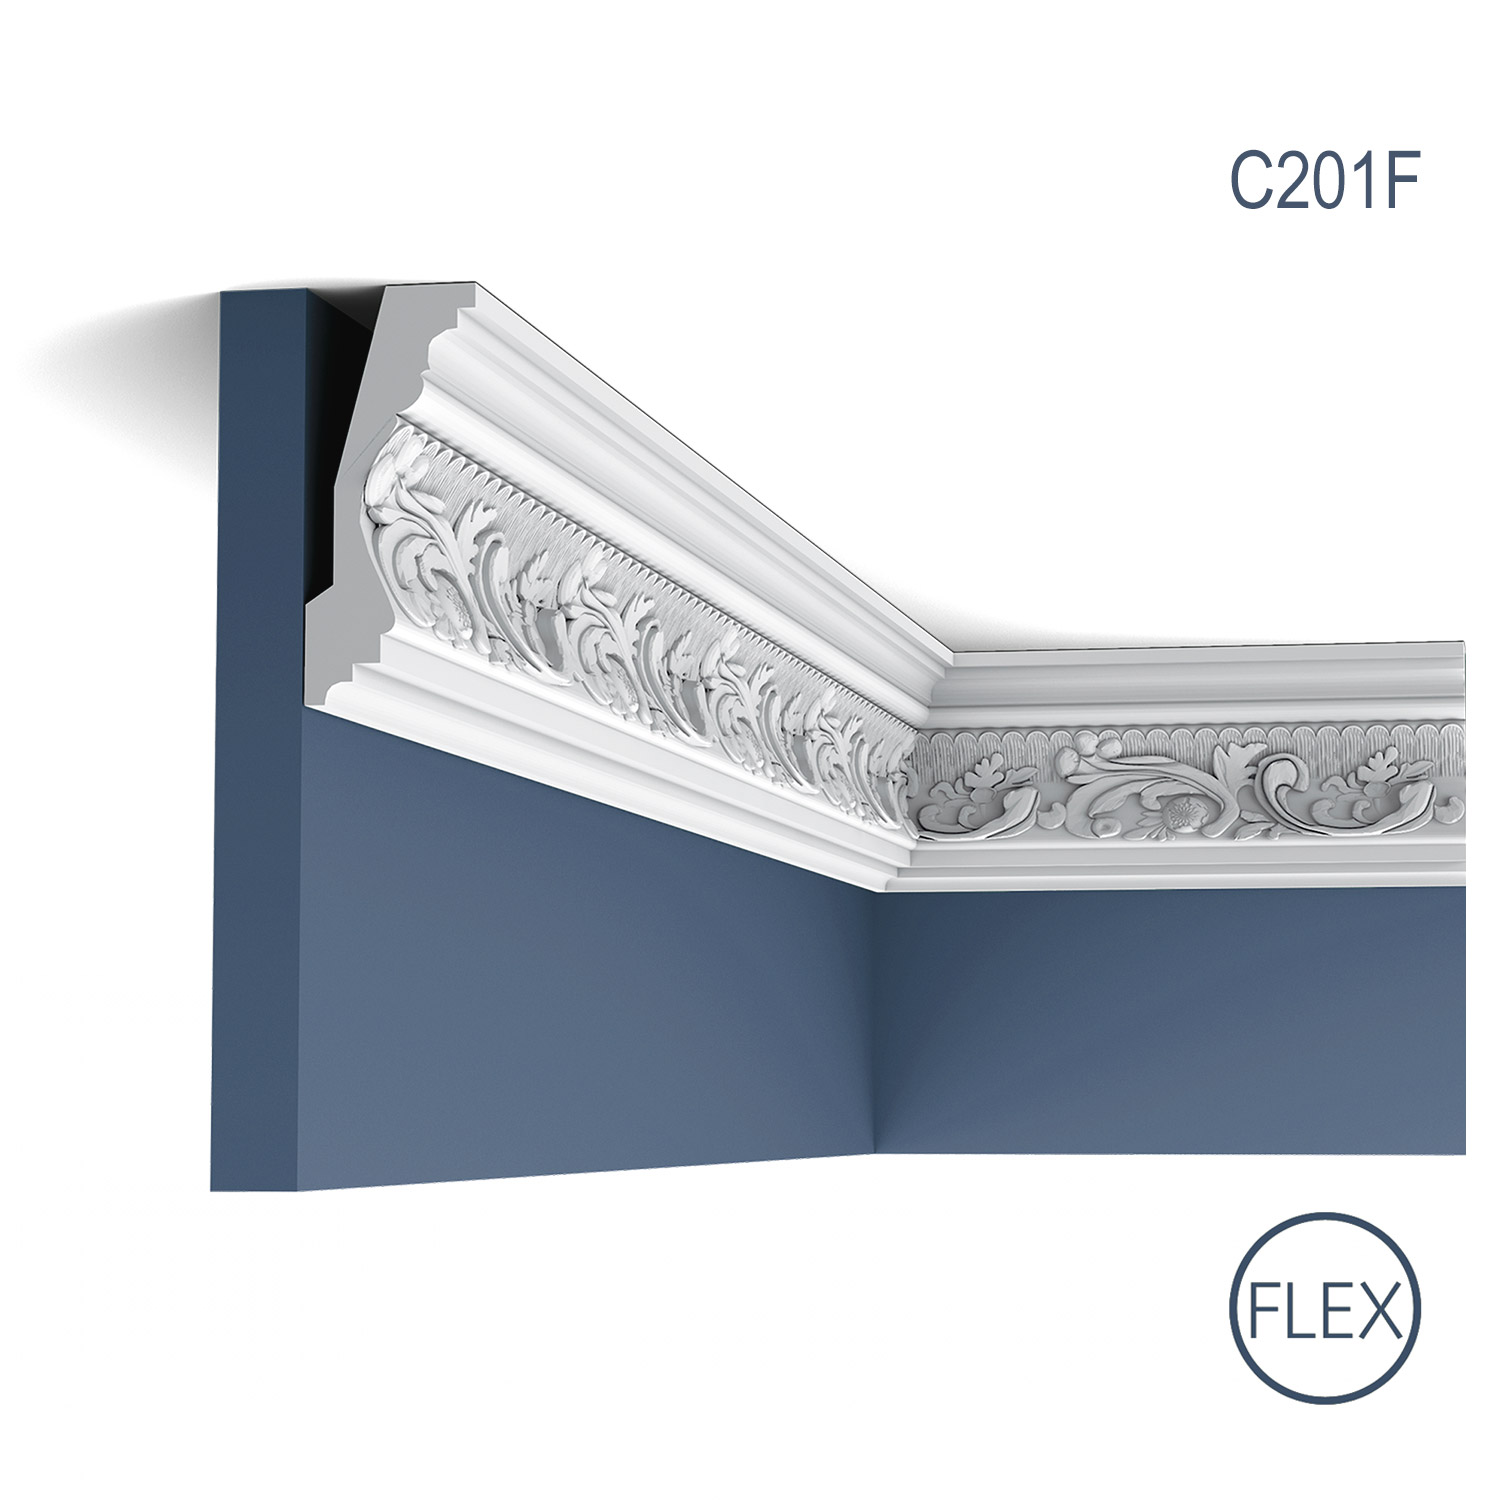 Cornisa Flex Luxxus C201F, Dimensiuni: 200 X 11.6 X 4.8 cm, Orac Decor